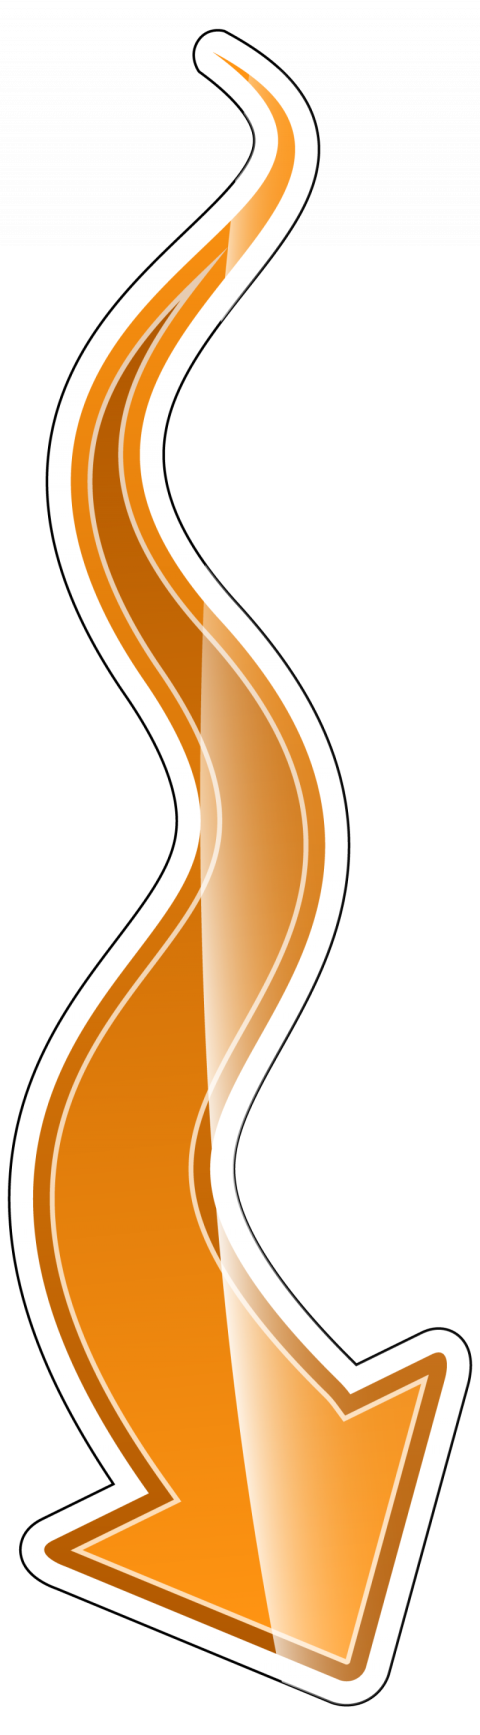 Orange colour snake style arrow vector graphic design